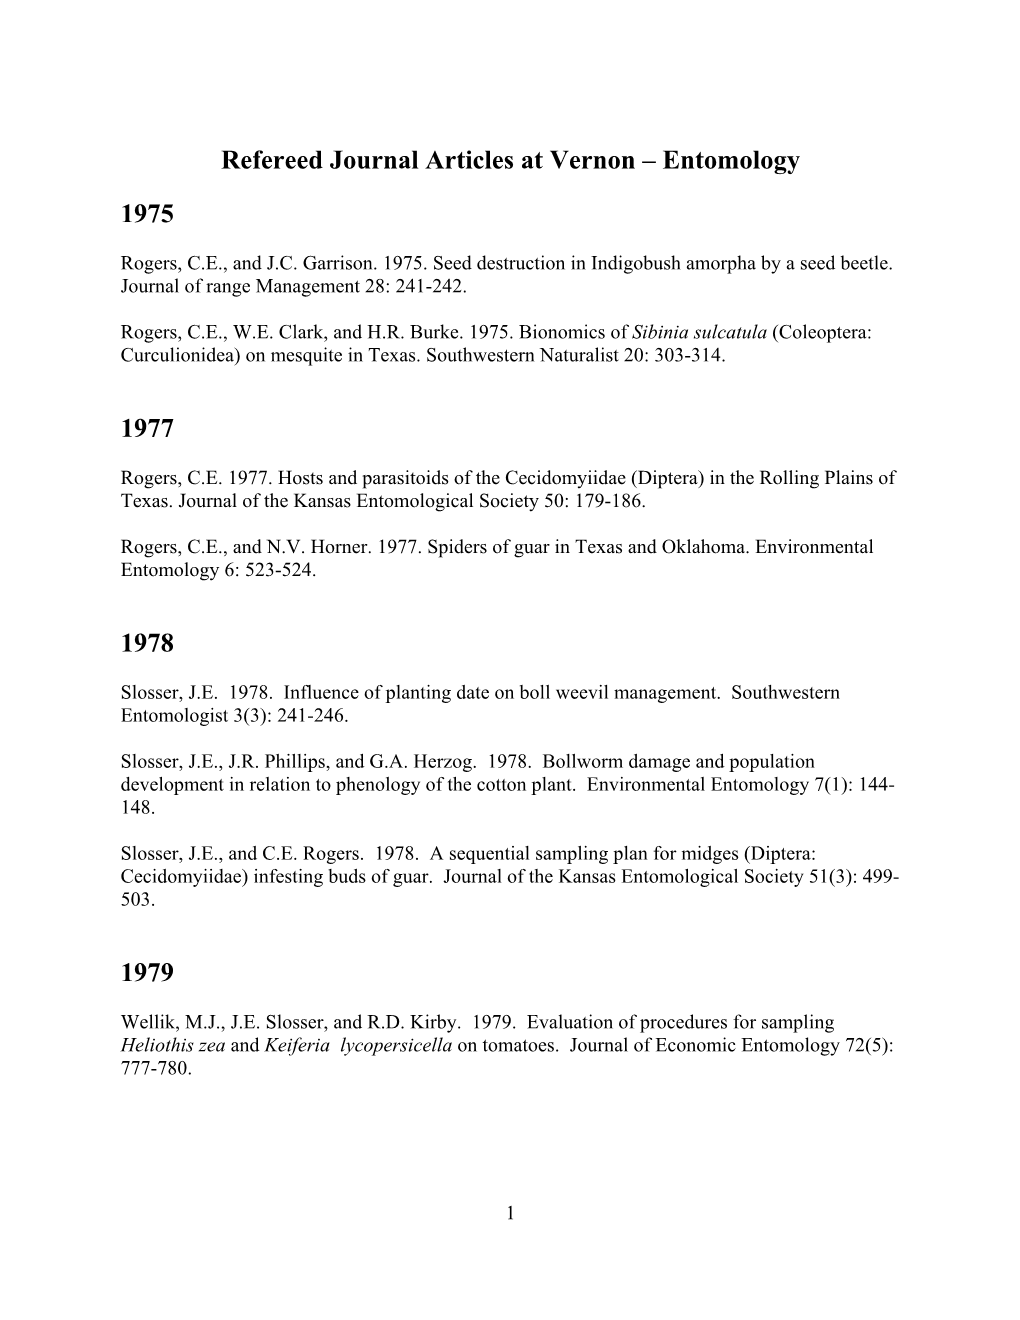 Refereed Journal Articles at Vernon – Entomology 1975 1977 1978